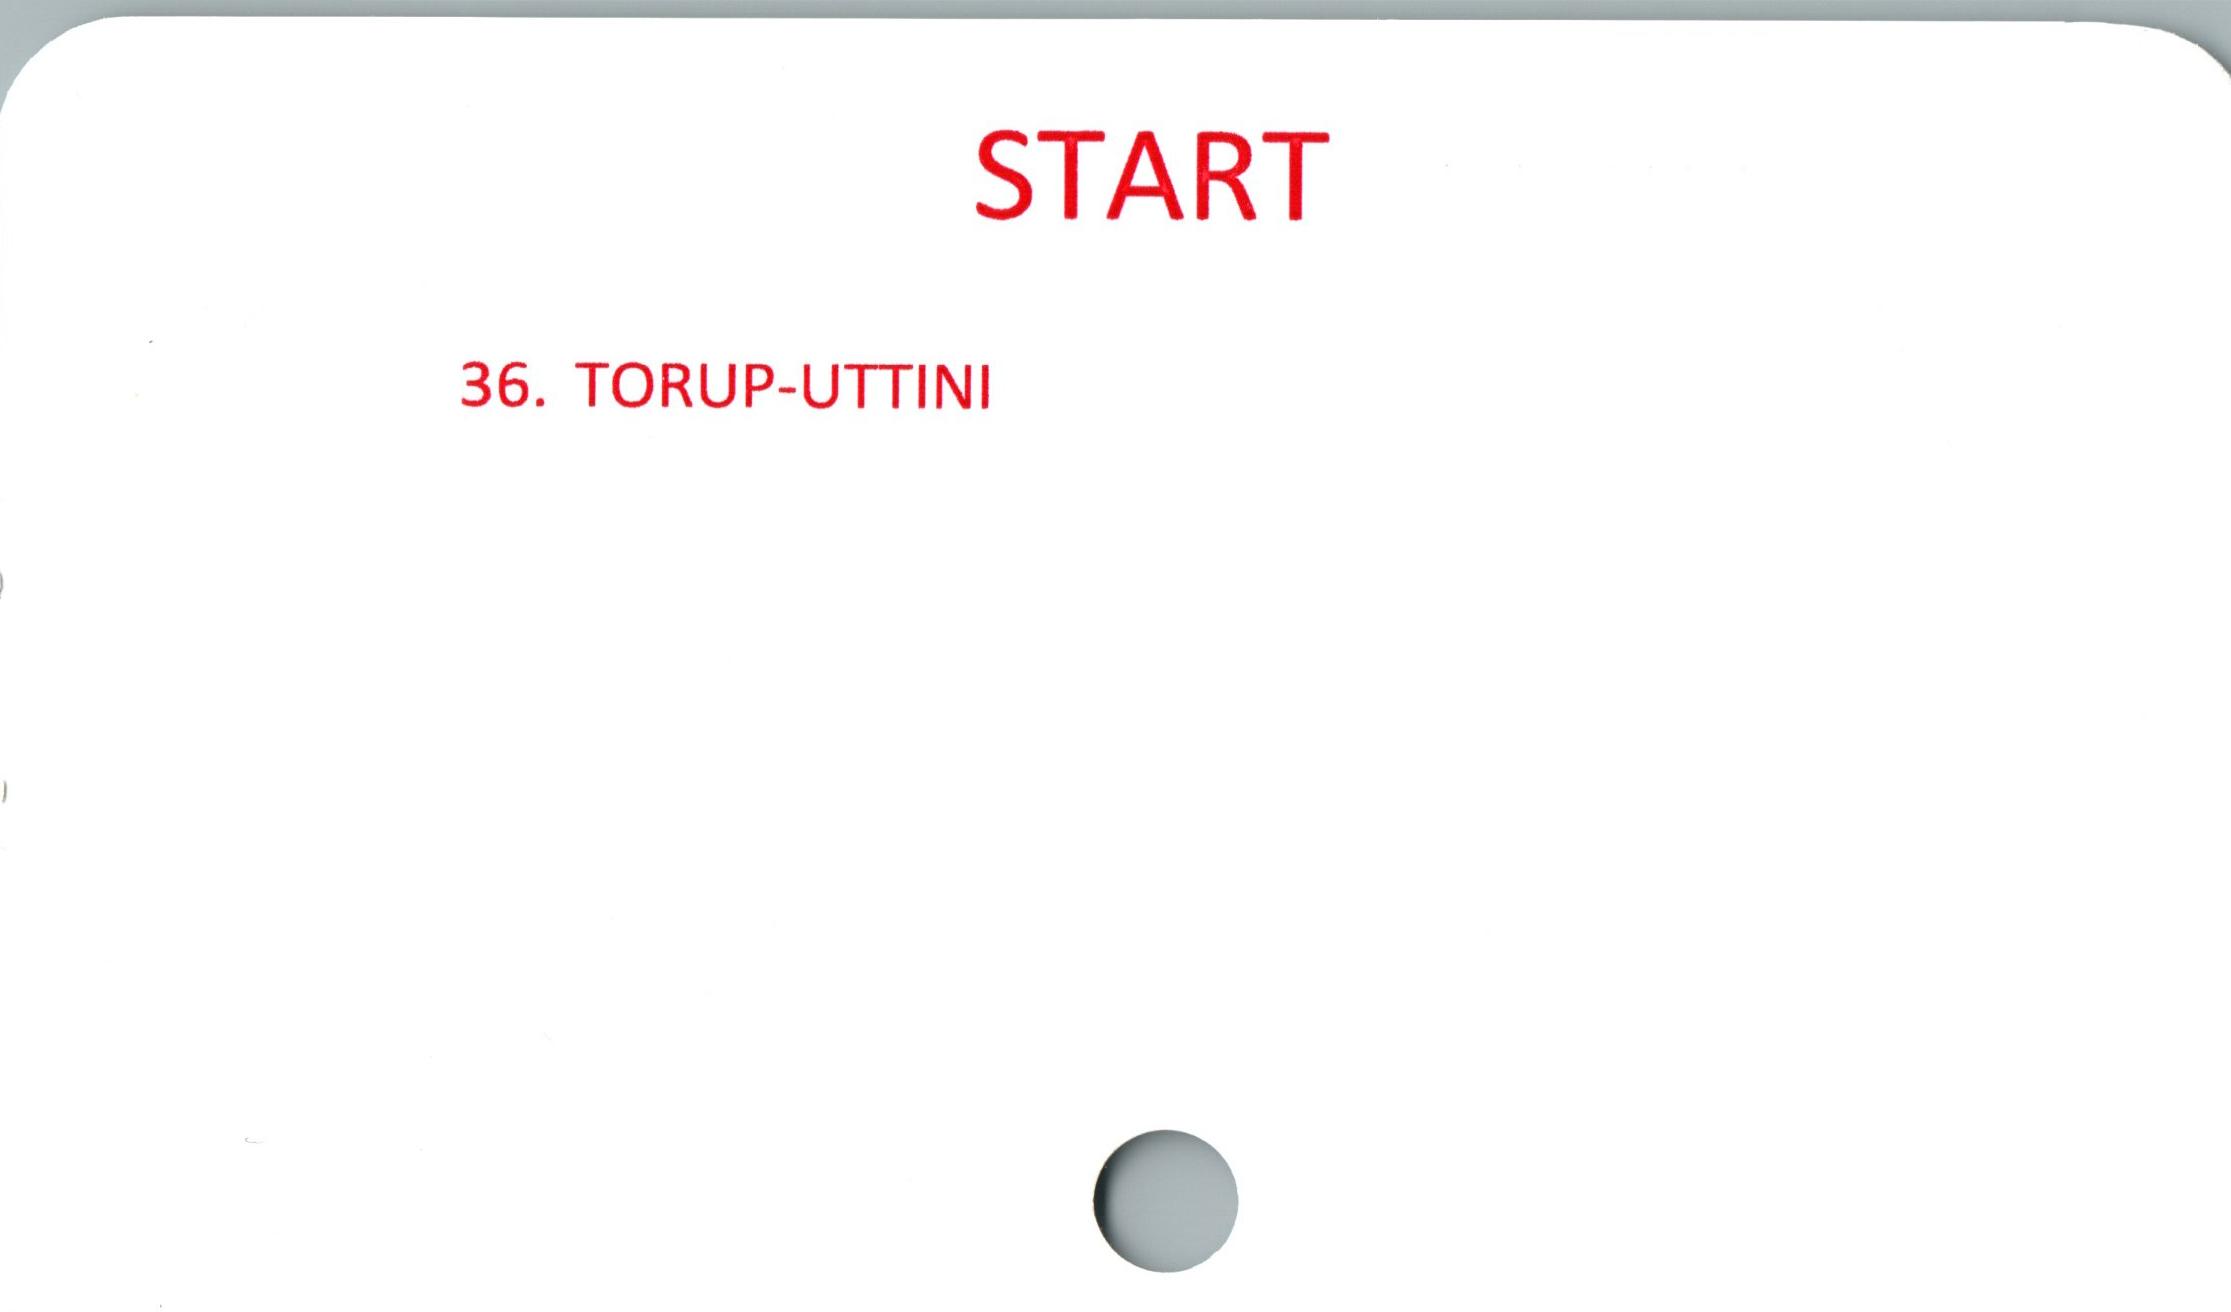  ﻿START

36. TORUP-UTTINI